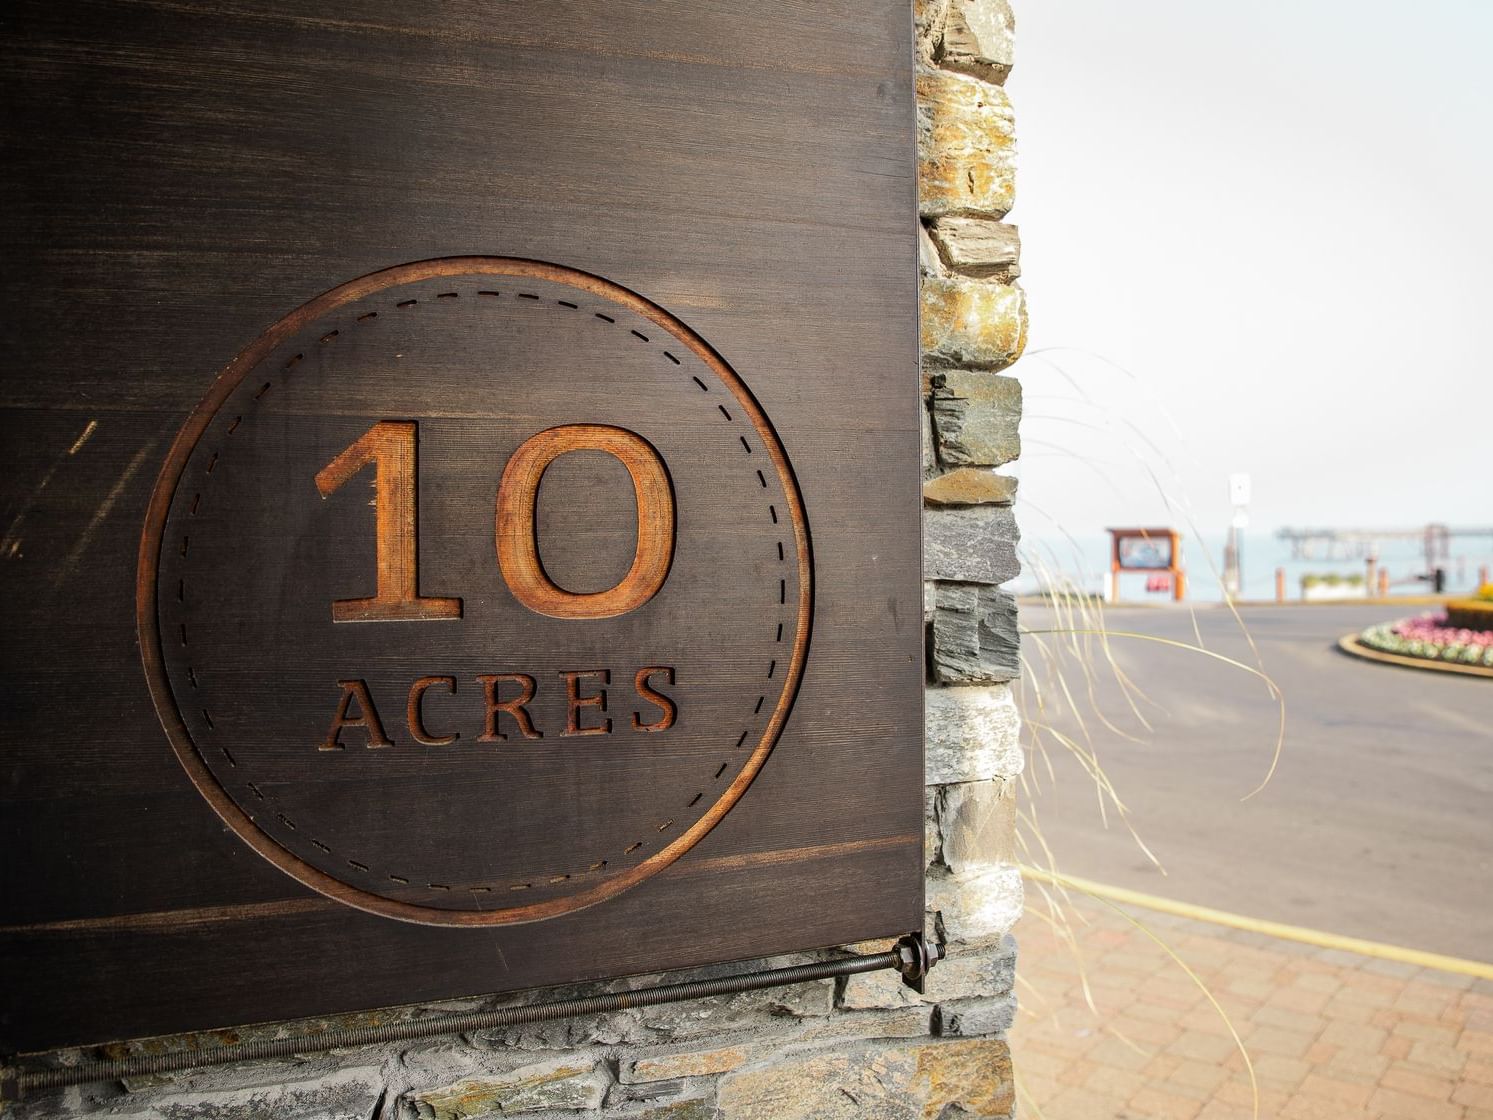 10 acres restaurant logo